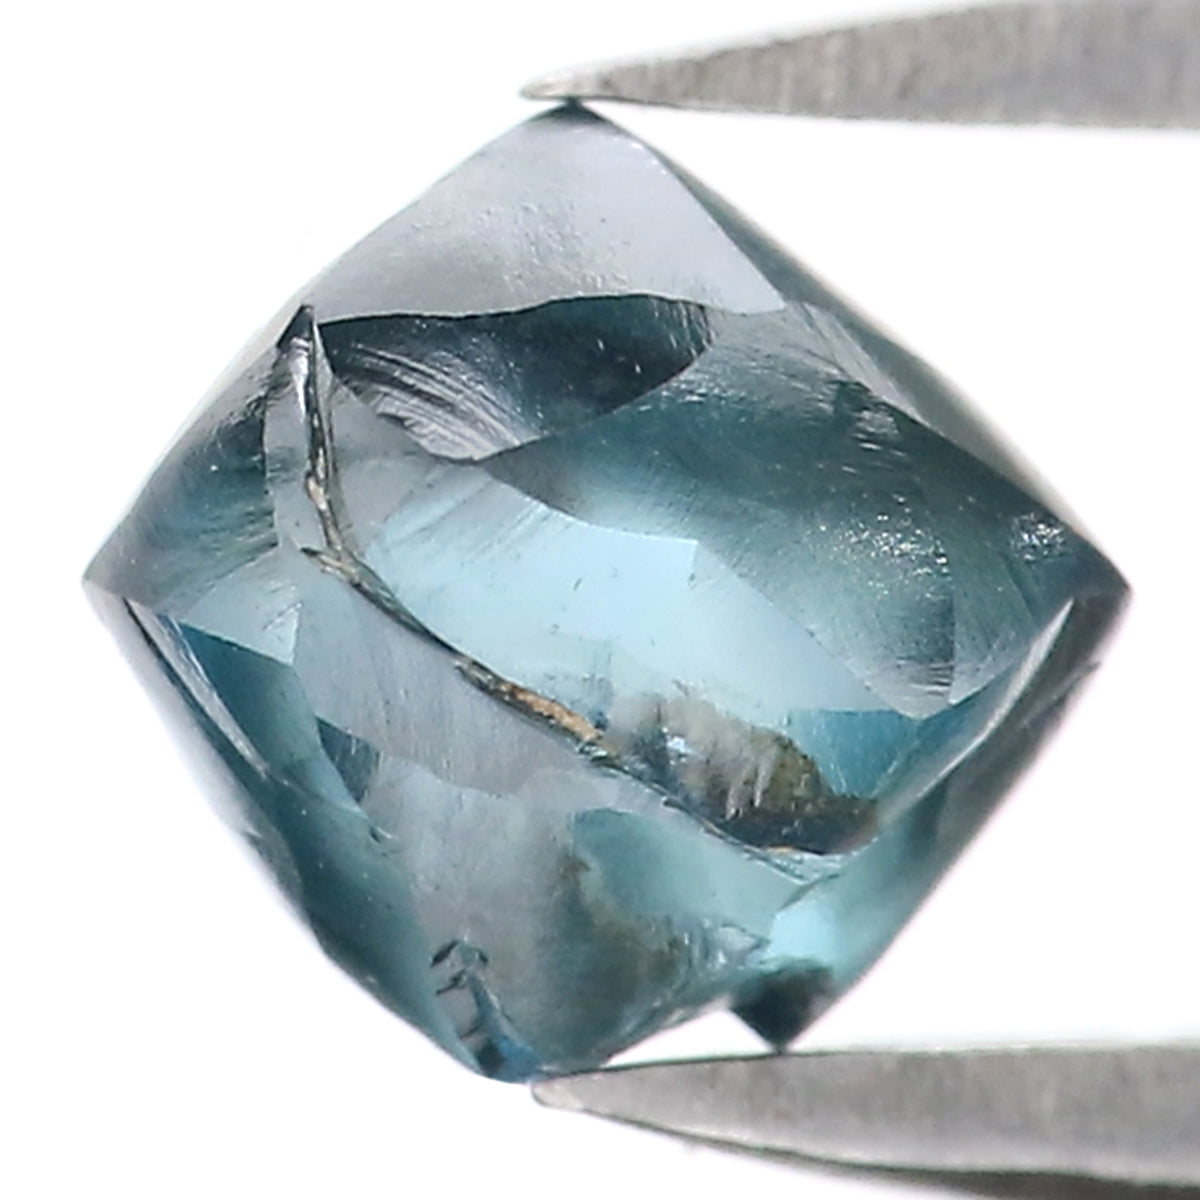 Natural Loose Rough Blue Color Diamond 1.34 CT 6.25 MM Rough Irregular Cut Diamond KDL2301